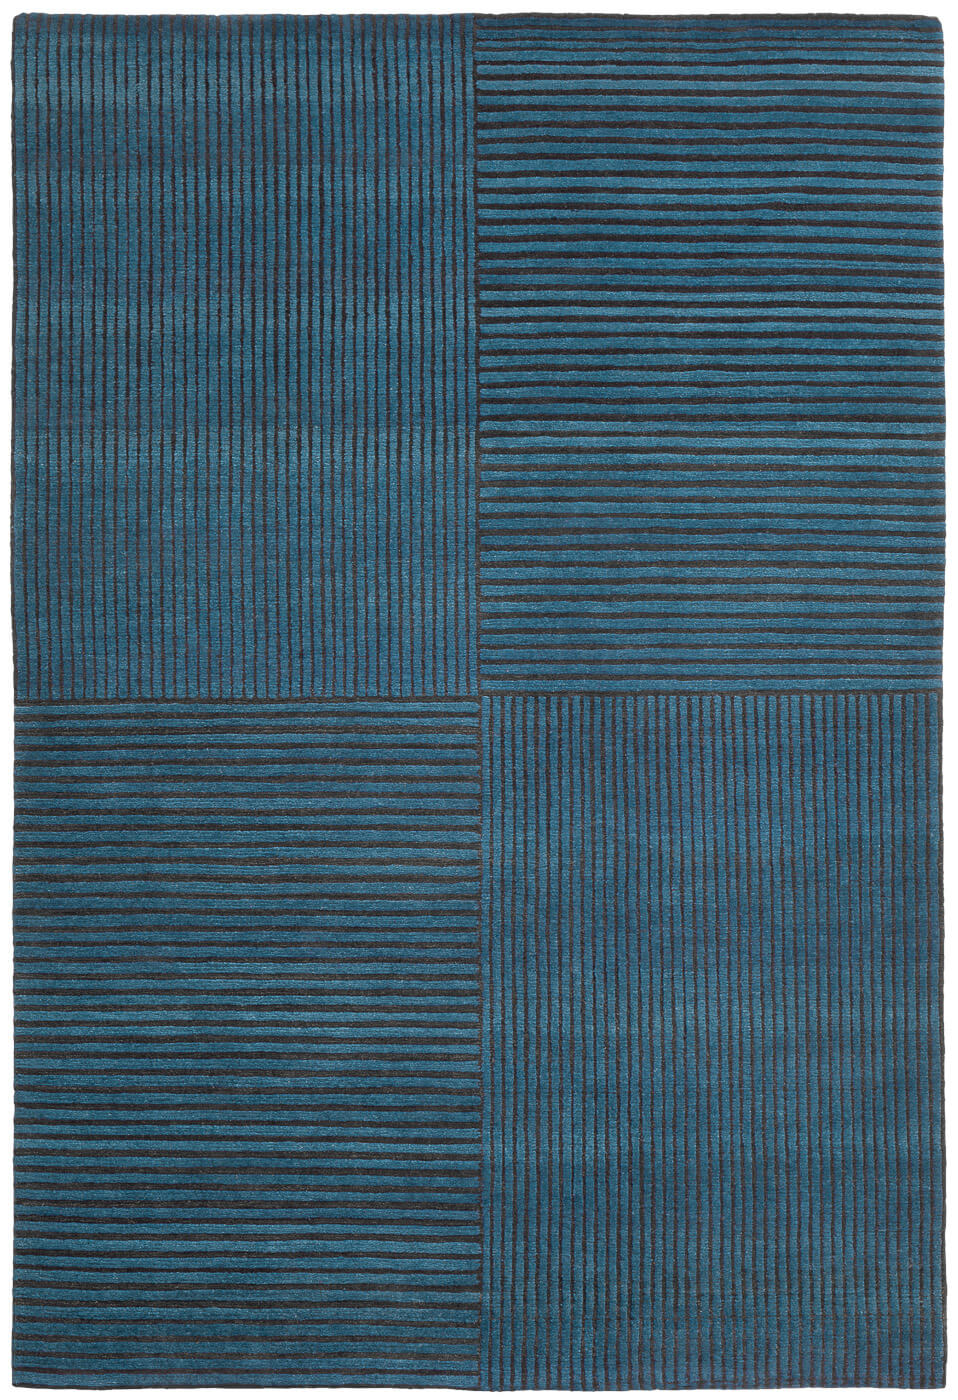 Gamba Vario 1 Blue Rug ☞ Size: 200 x 300 cm